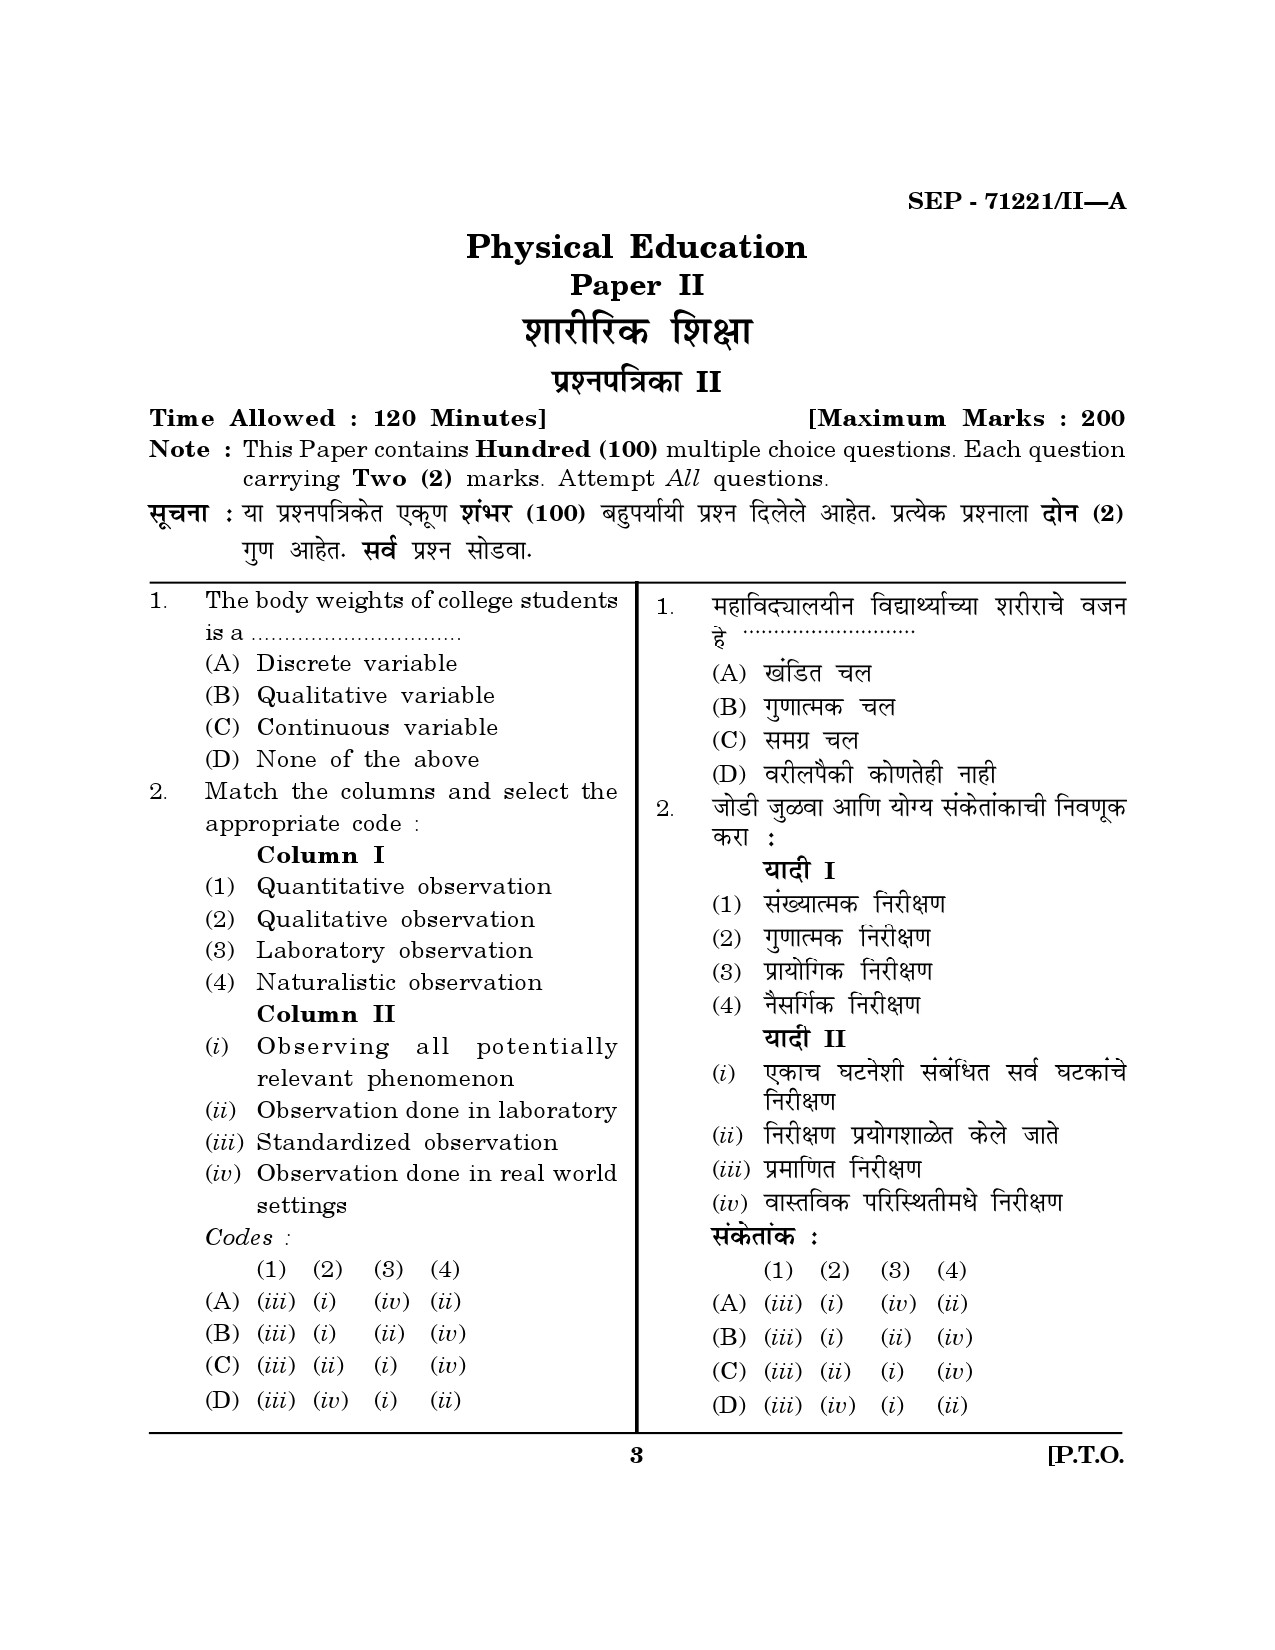 Maharashtra SET Physical Education Exam Question Paper September 2021 2